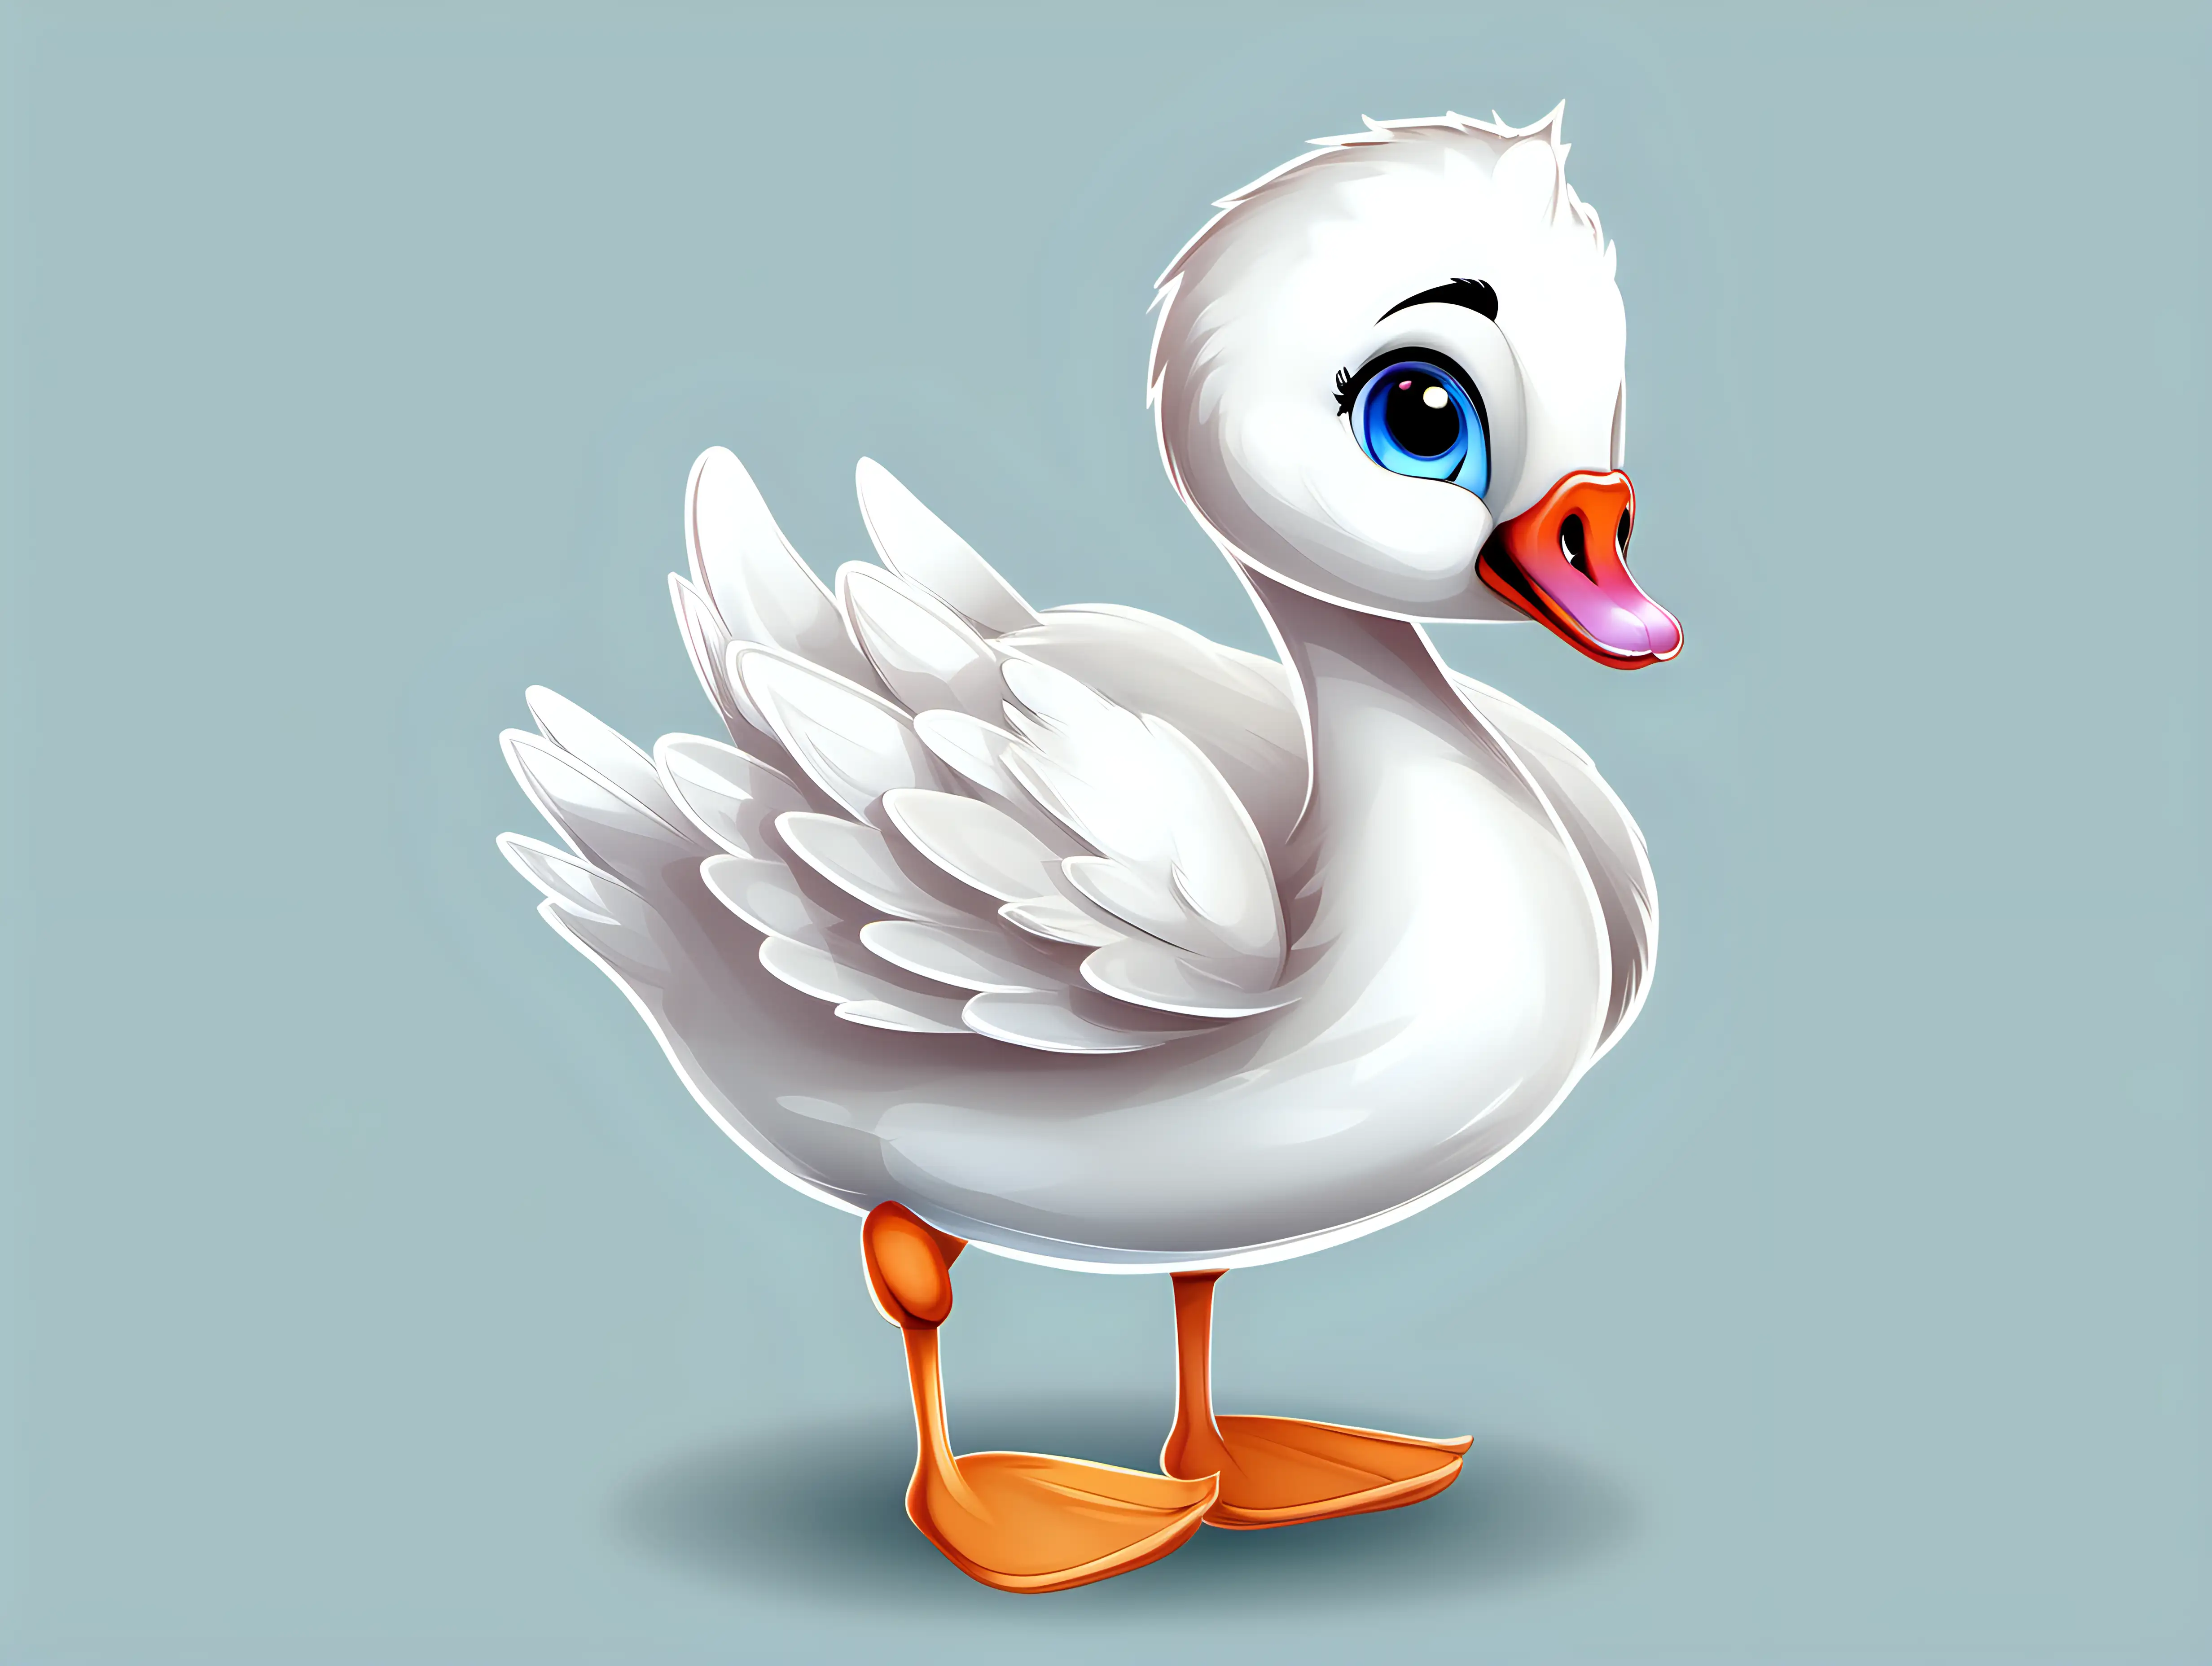 Friendly Animated Baby Swan Illustration on White Background